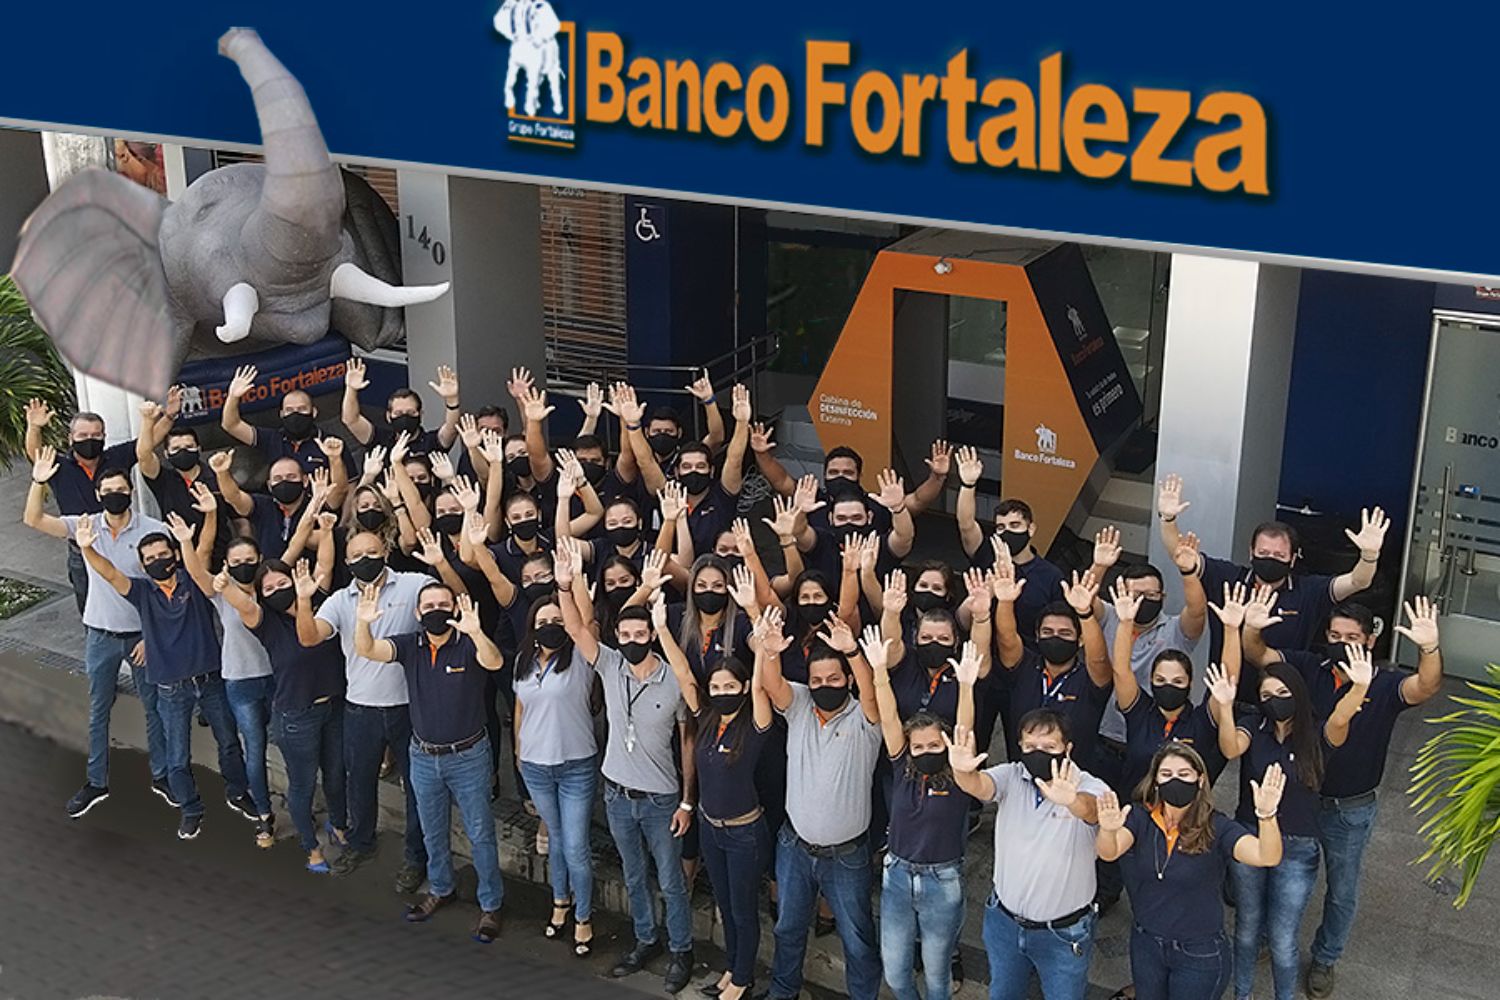 2021-Banco_Fortaleza-LATAM-Photo1-BEST1